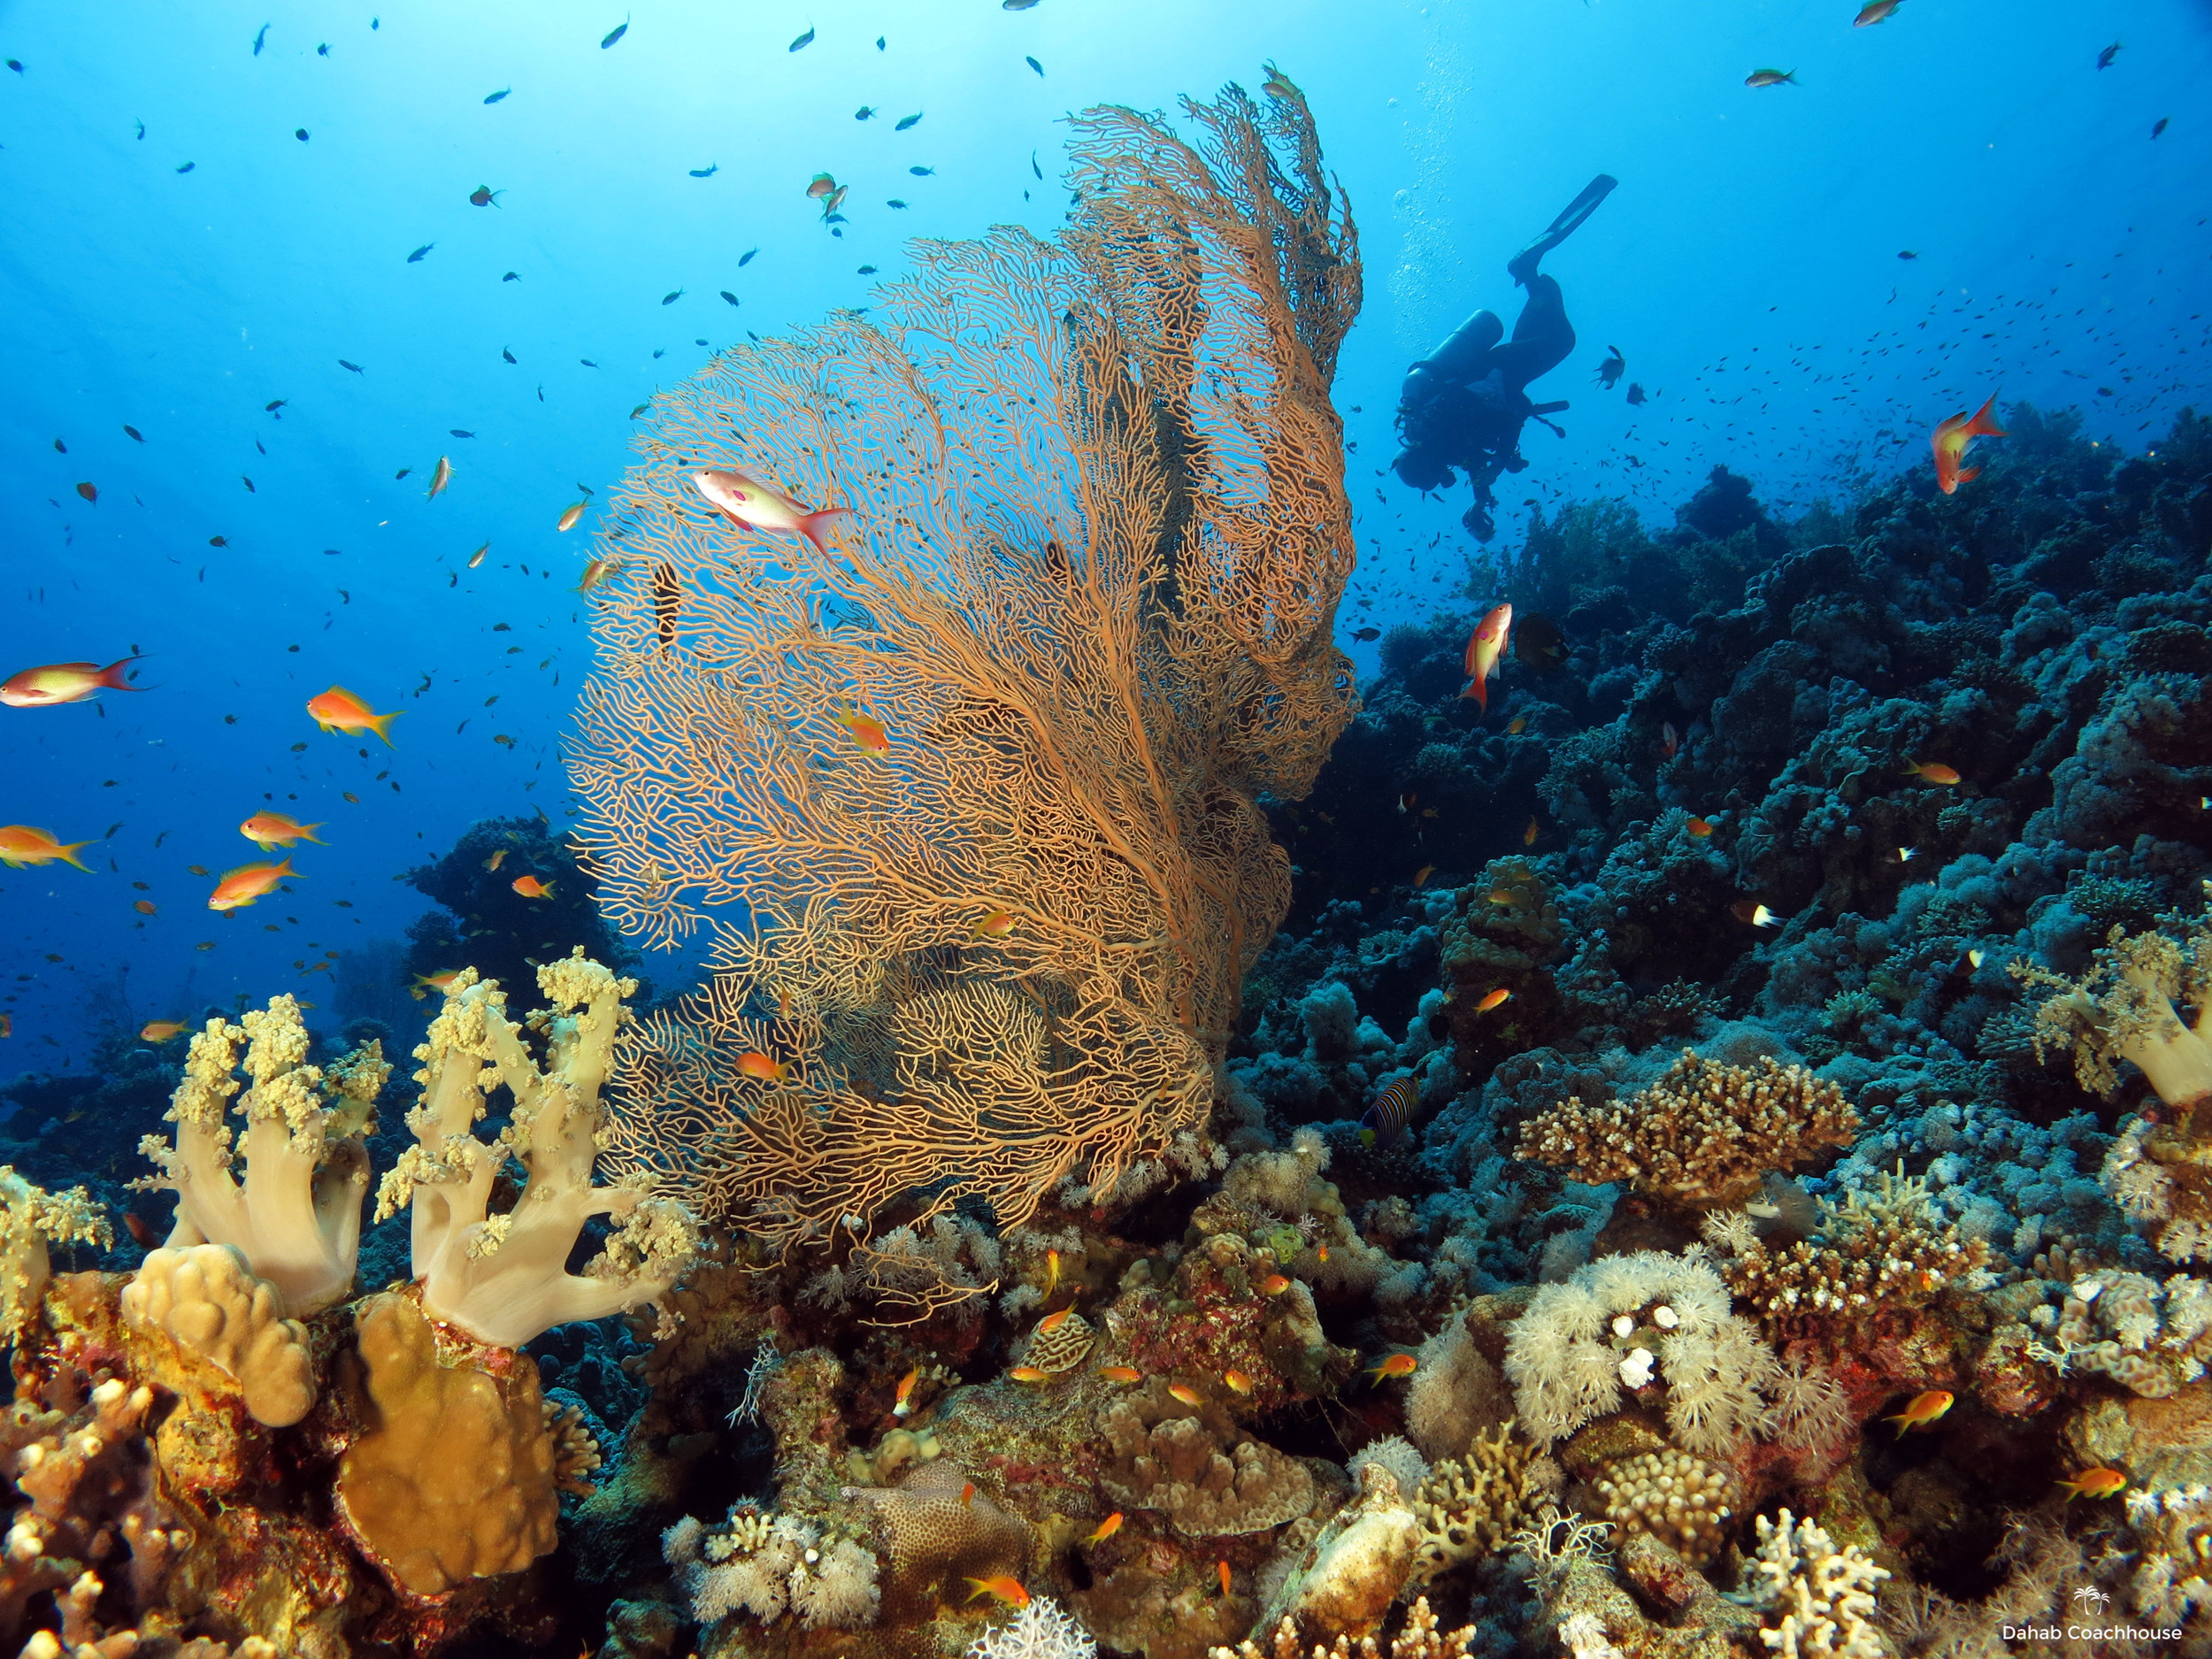 Dahab_Coachhouse_Egypt_Red_Sea_Diving_Beach_Accommodation_Holiday_Travel_Diver_Gorgonian.JPG